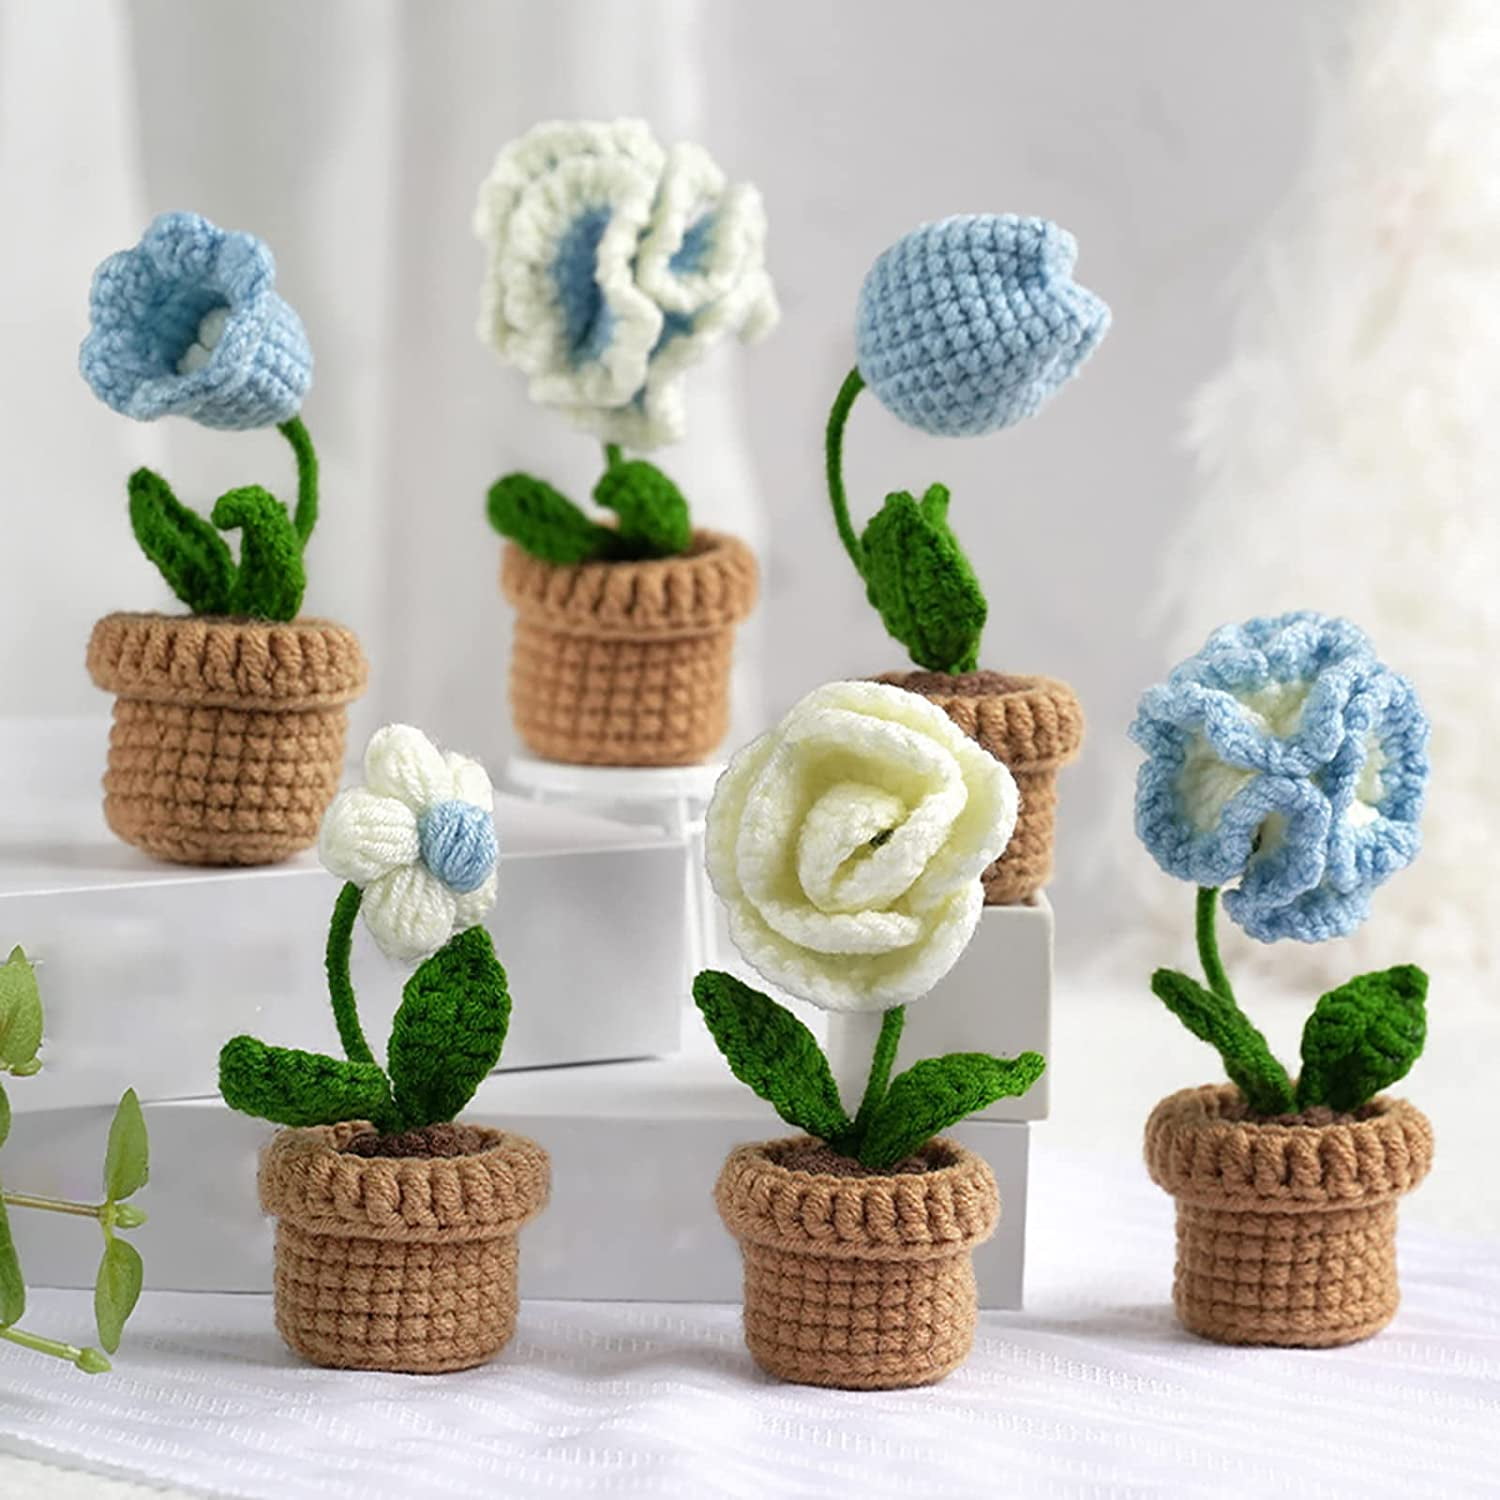 Beginner Crochet Kit-6 Pcs Easy Crochet Flower For Adult With Video  Tutorial Potted Plants For Home Decor [xc]